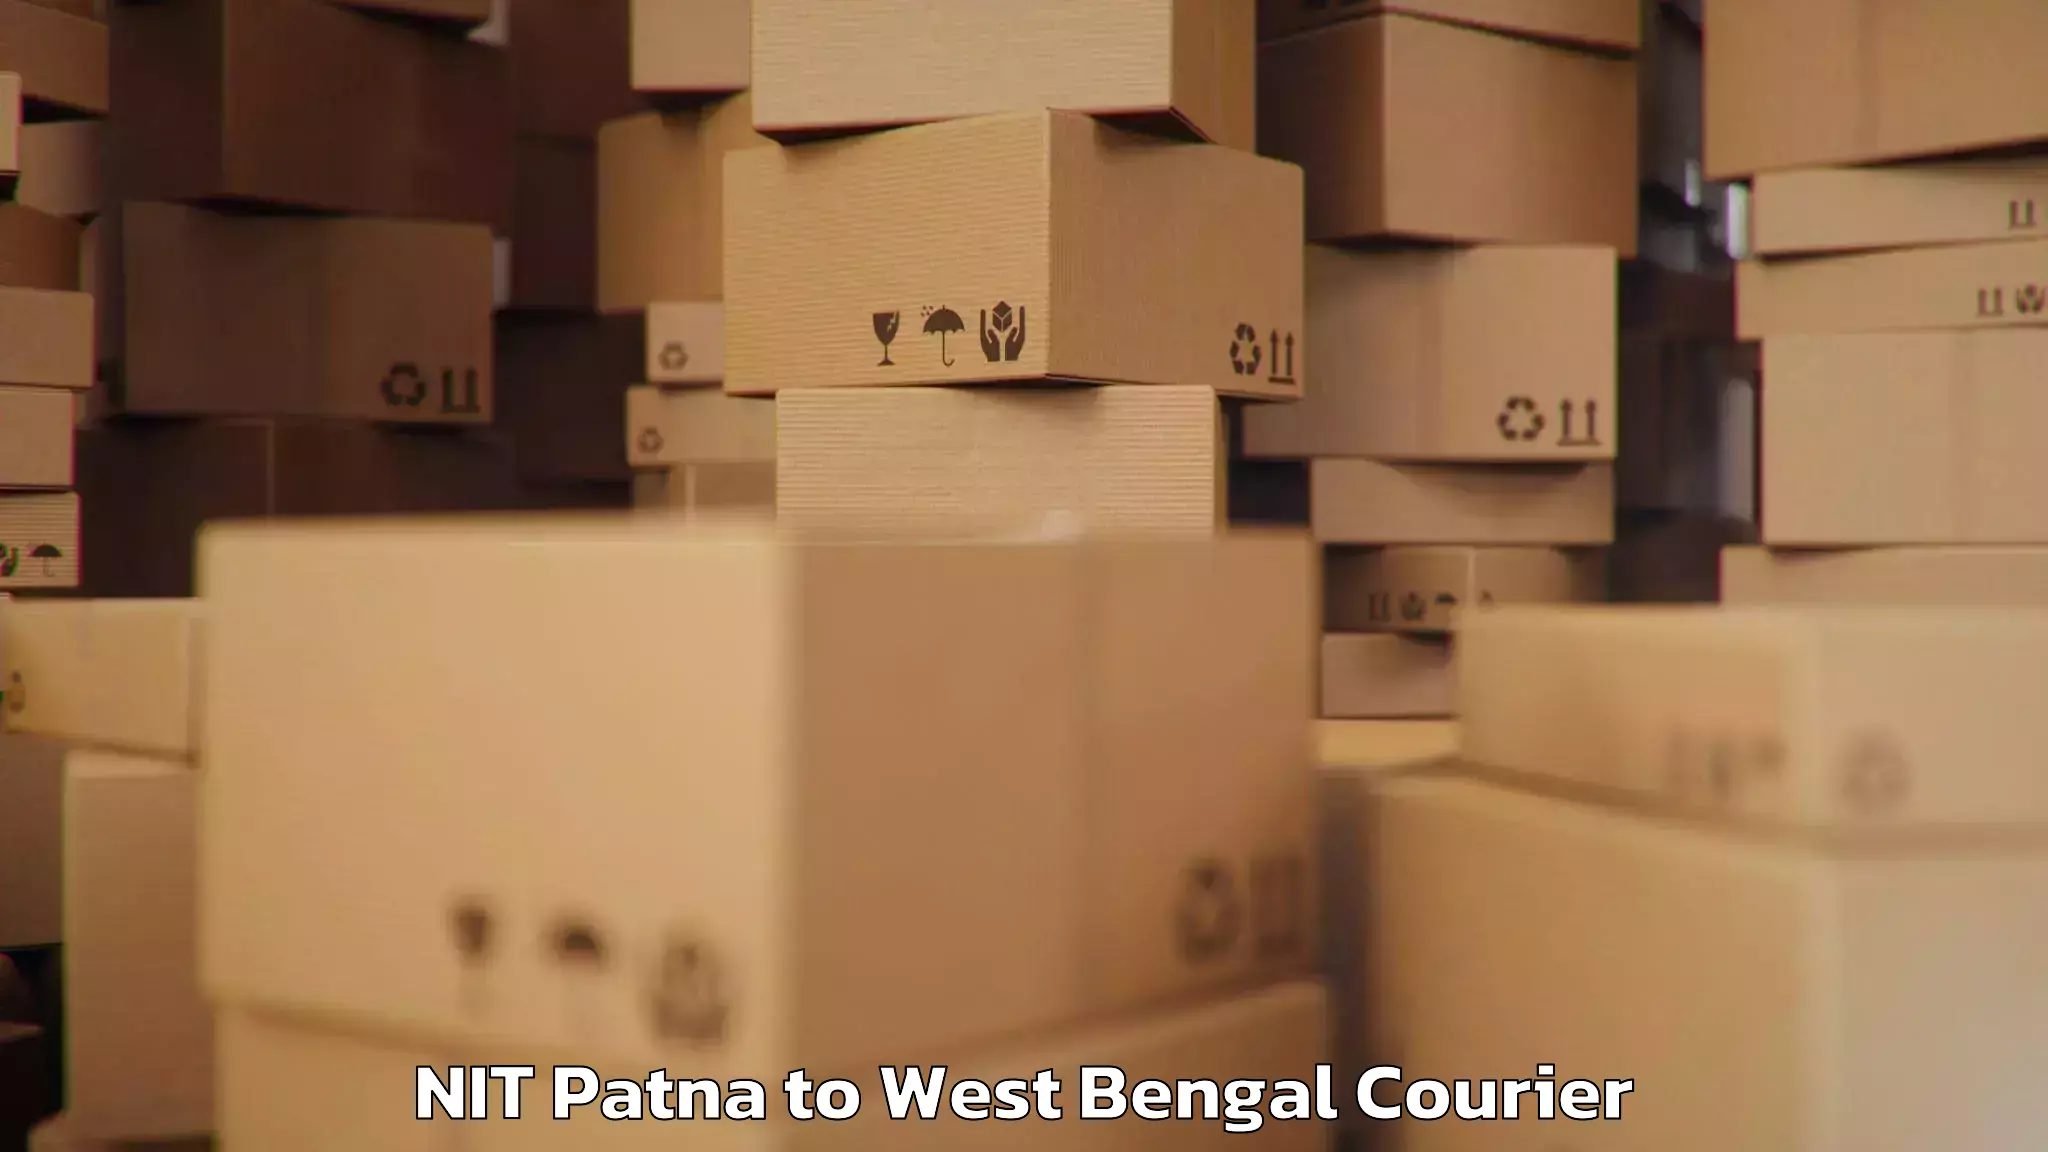 Personal effects shipping NIT Patna to IIT Kharagpur